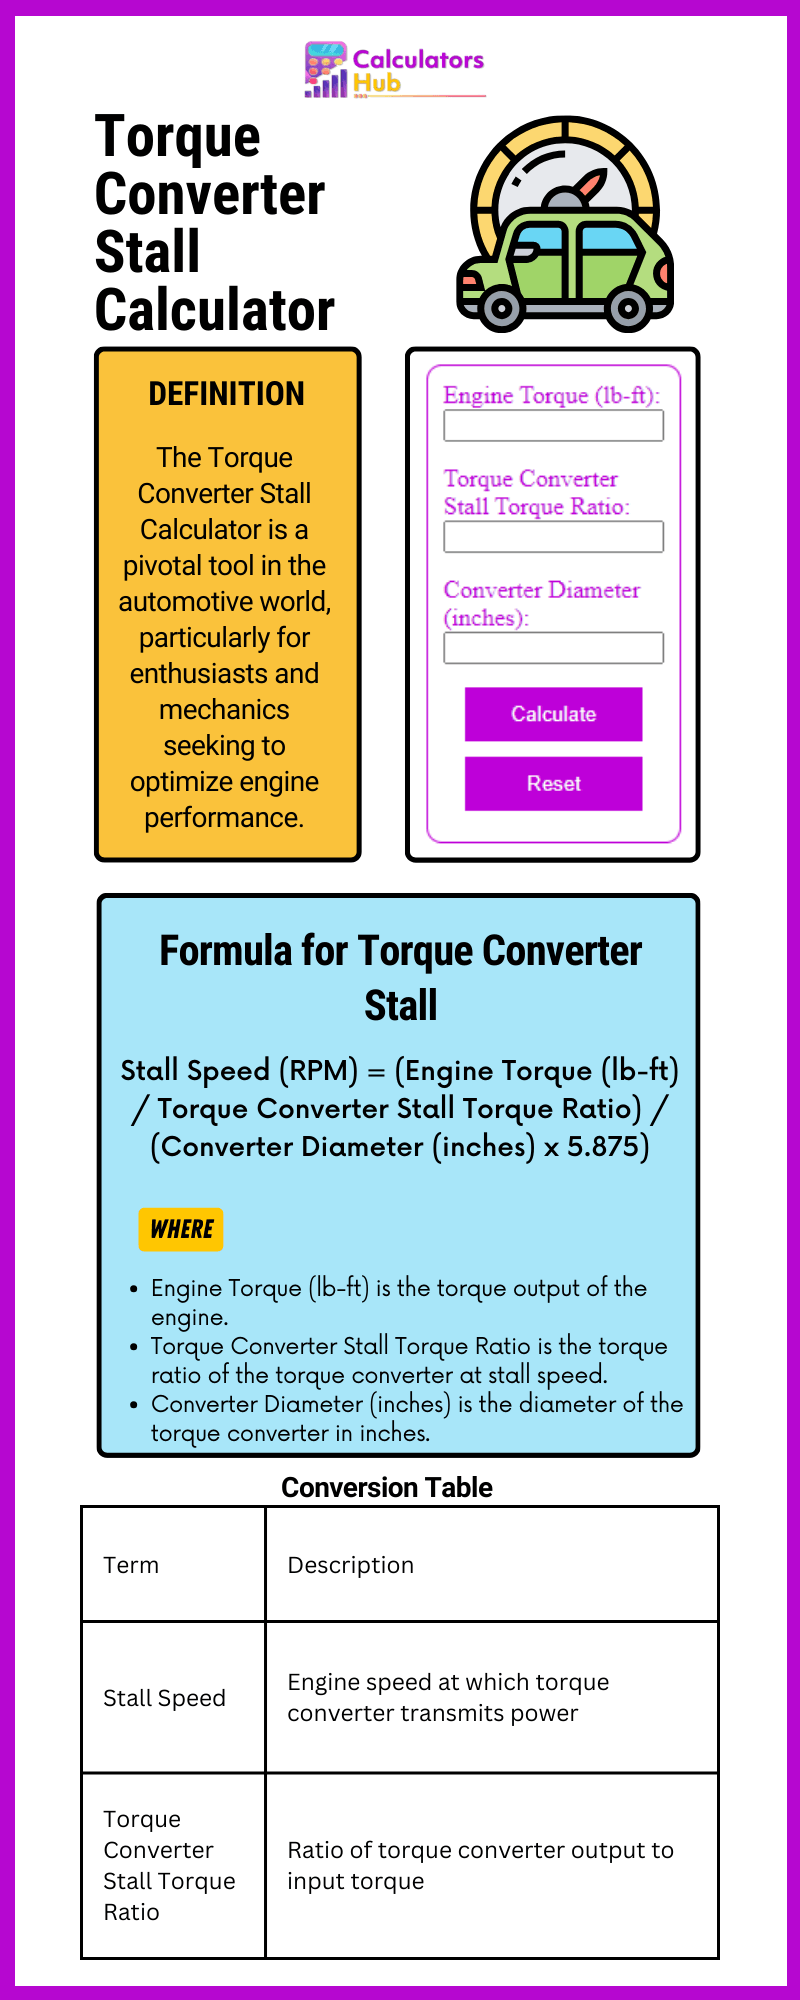 Torque Converter Stall Calculator